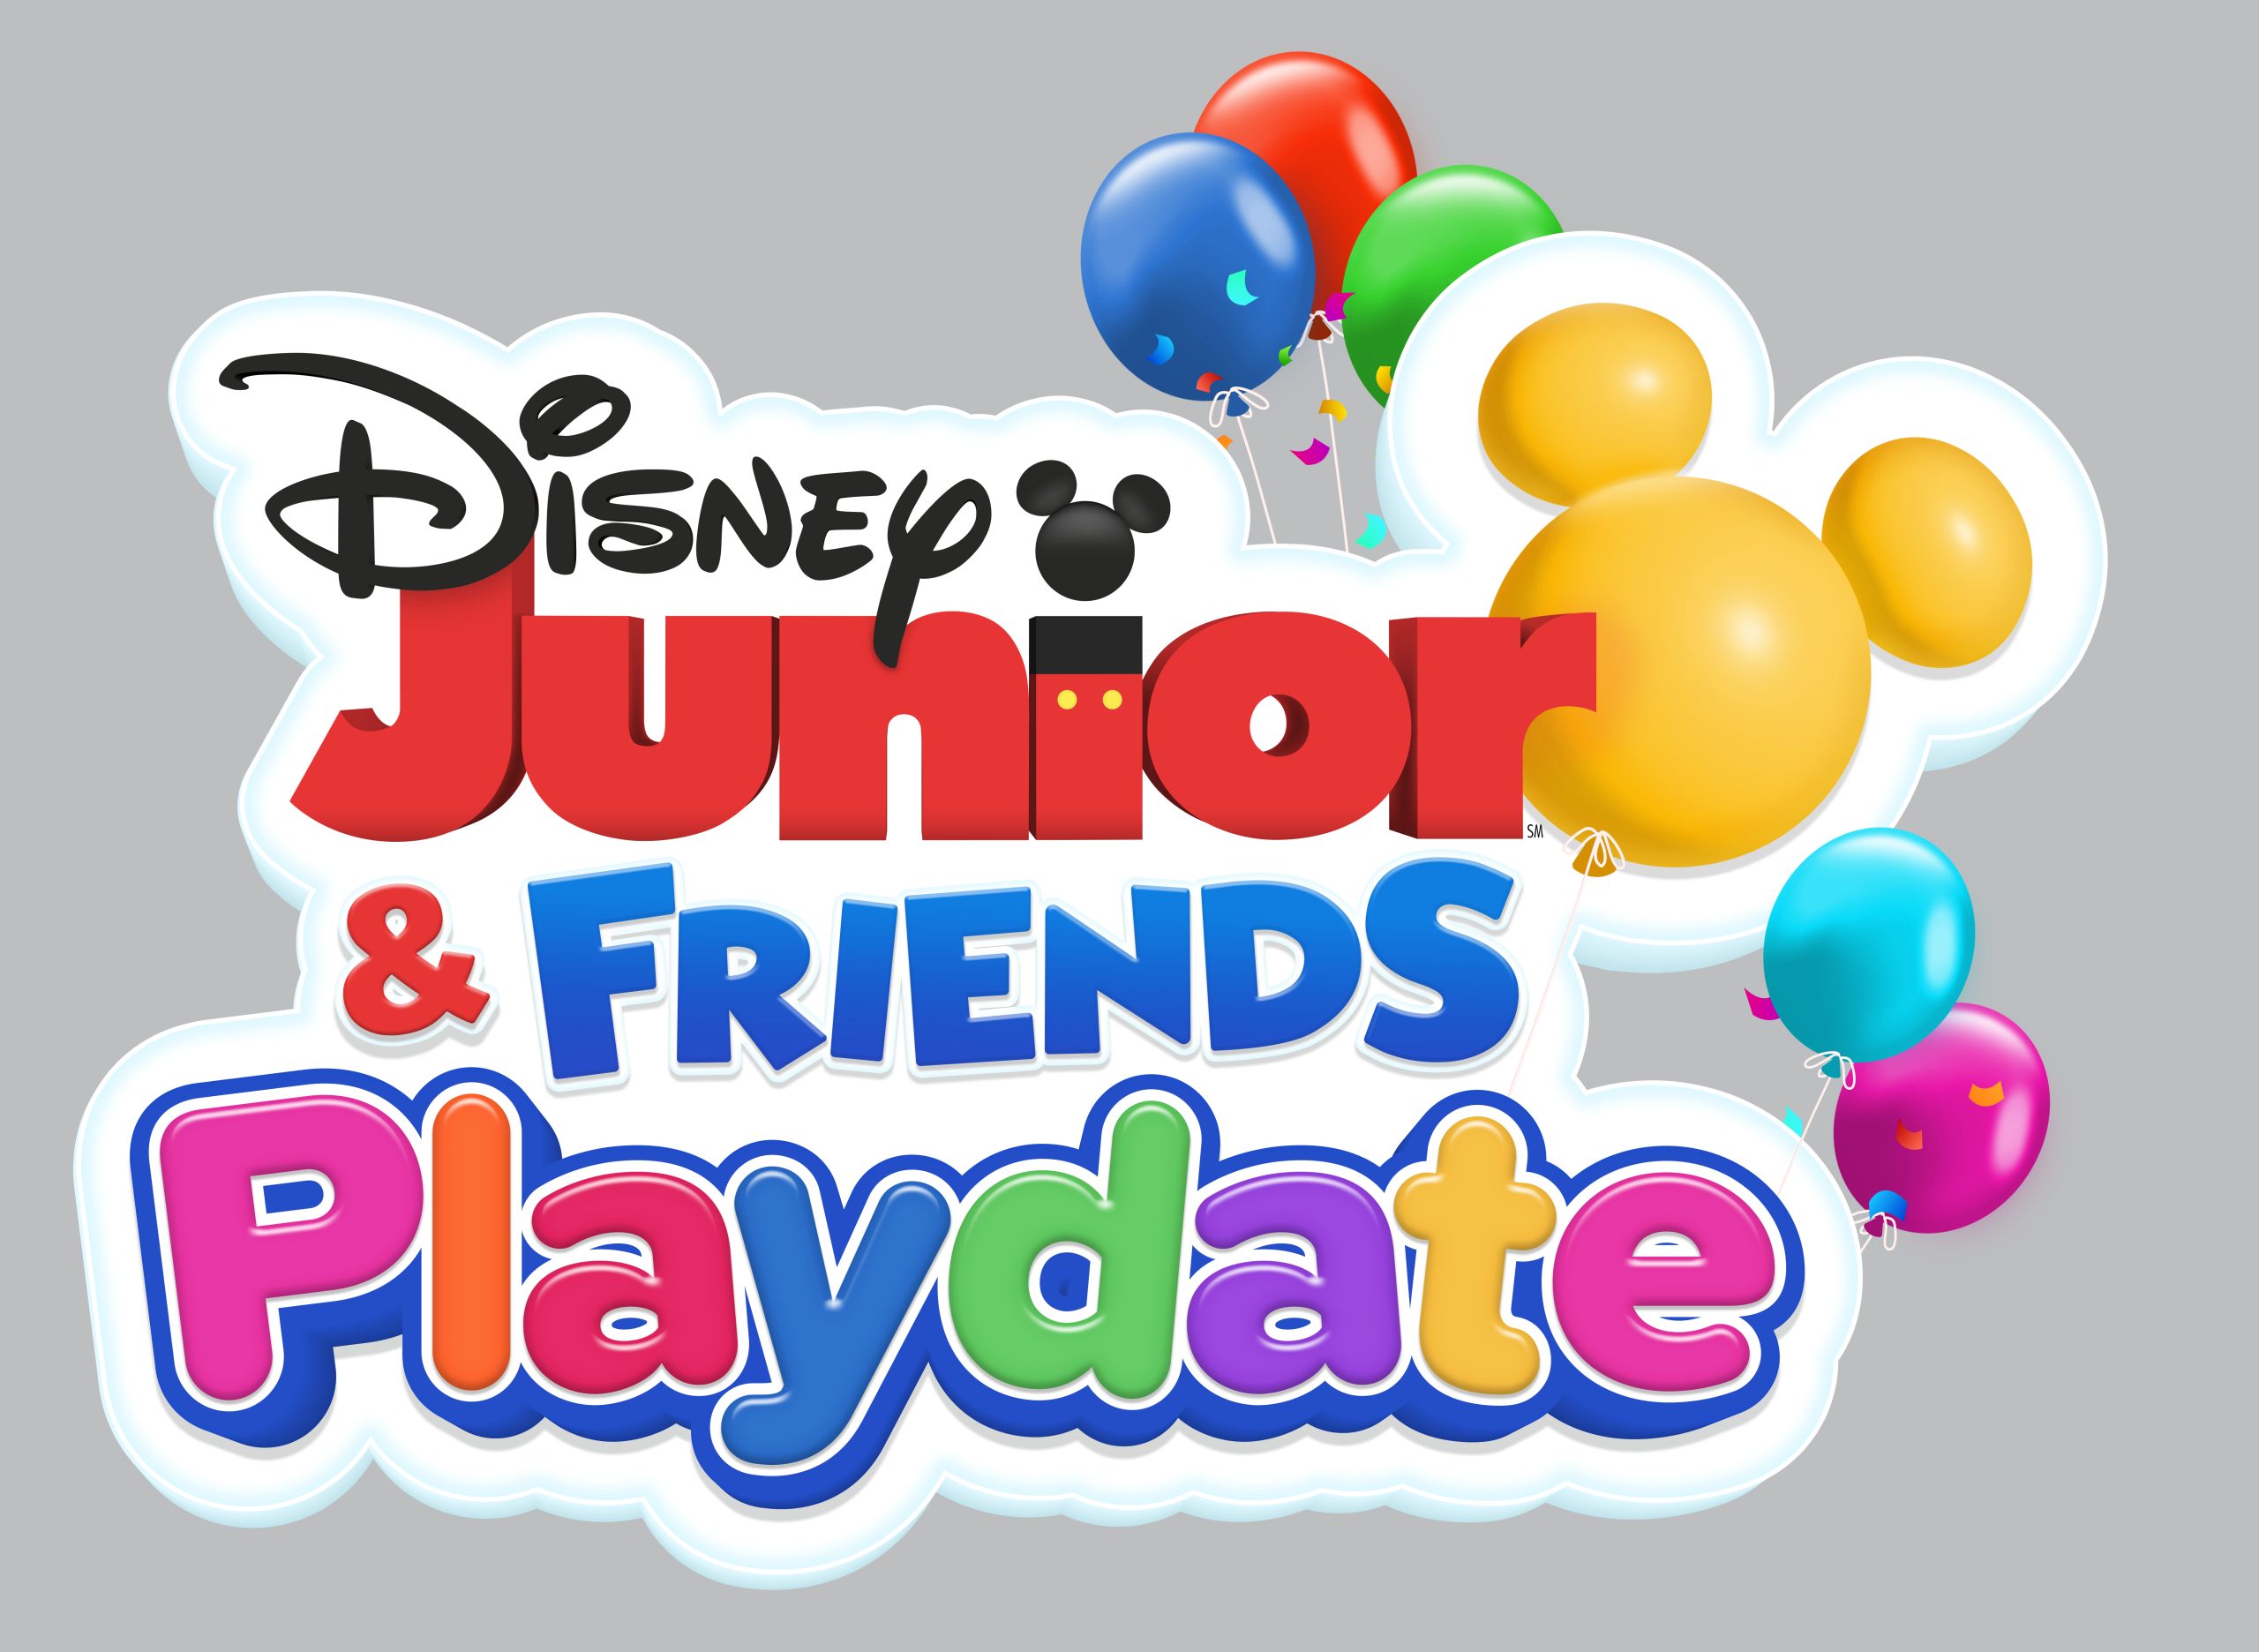 Disney Junior & Friends Playdate  Parenting OC, Family Fun, Weekend  Activities with Kids, Fun Finder